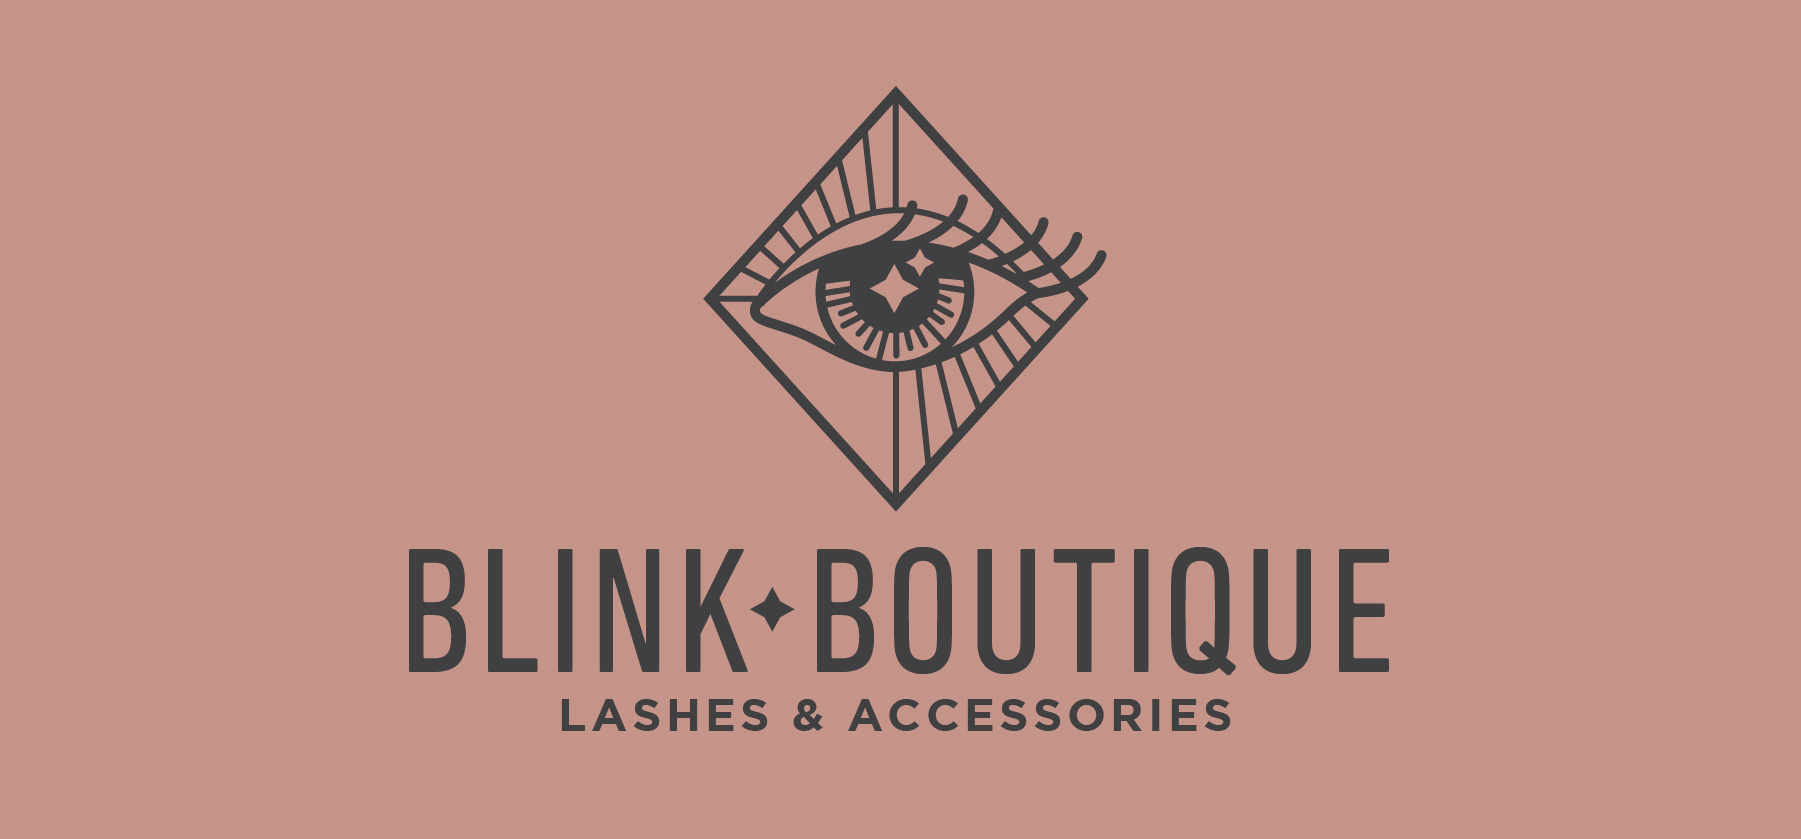 Blink Boutique - Branding